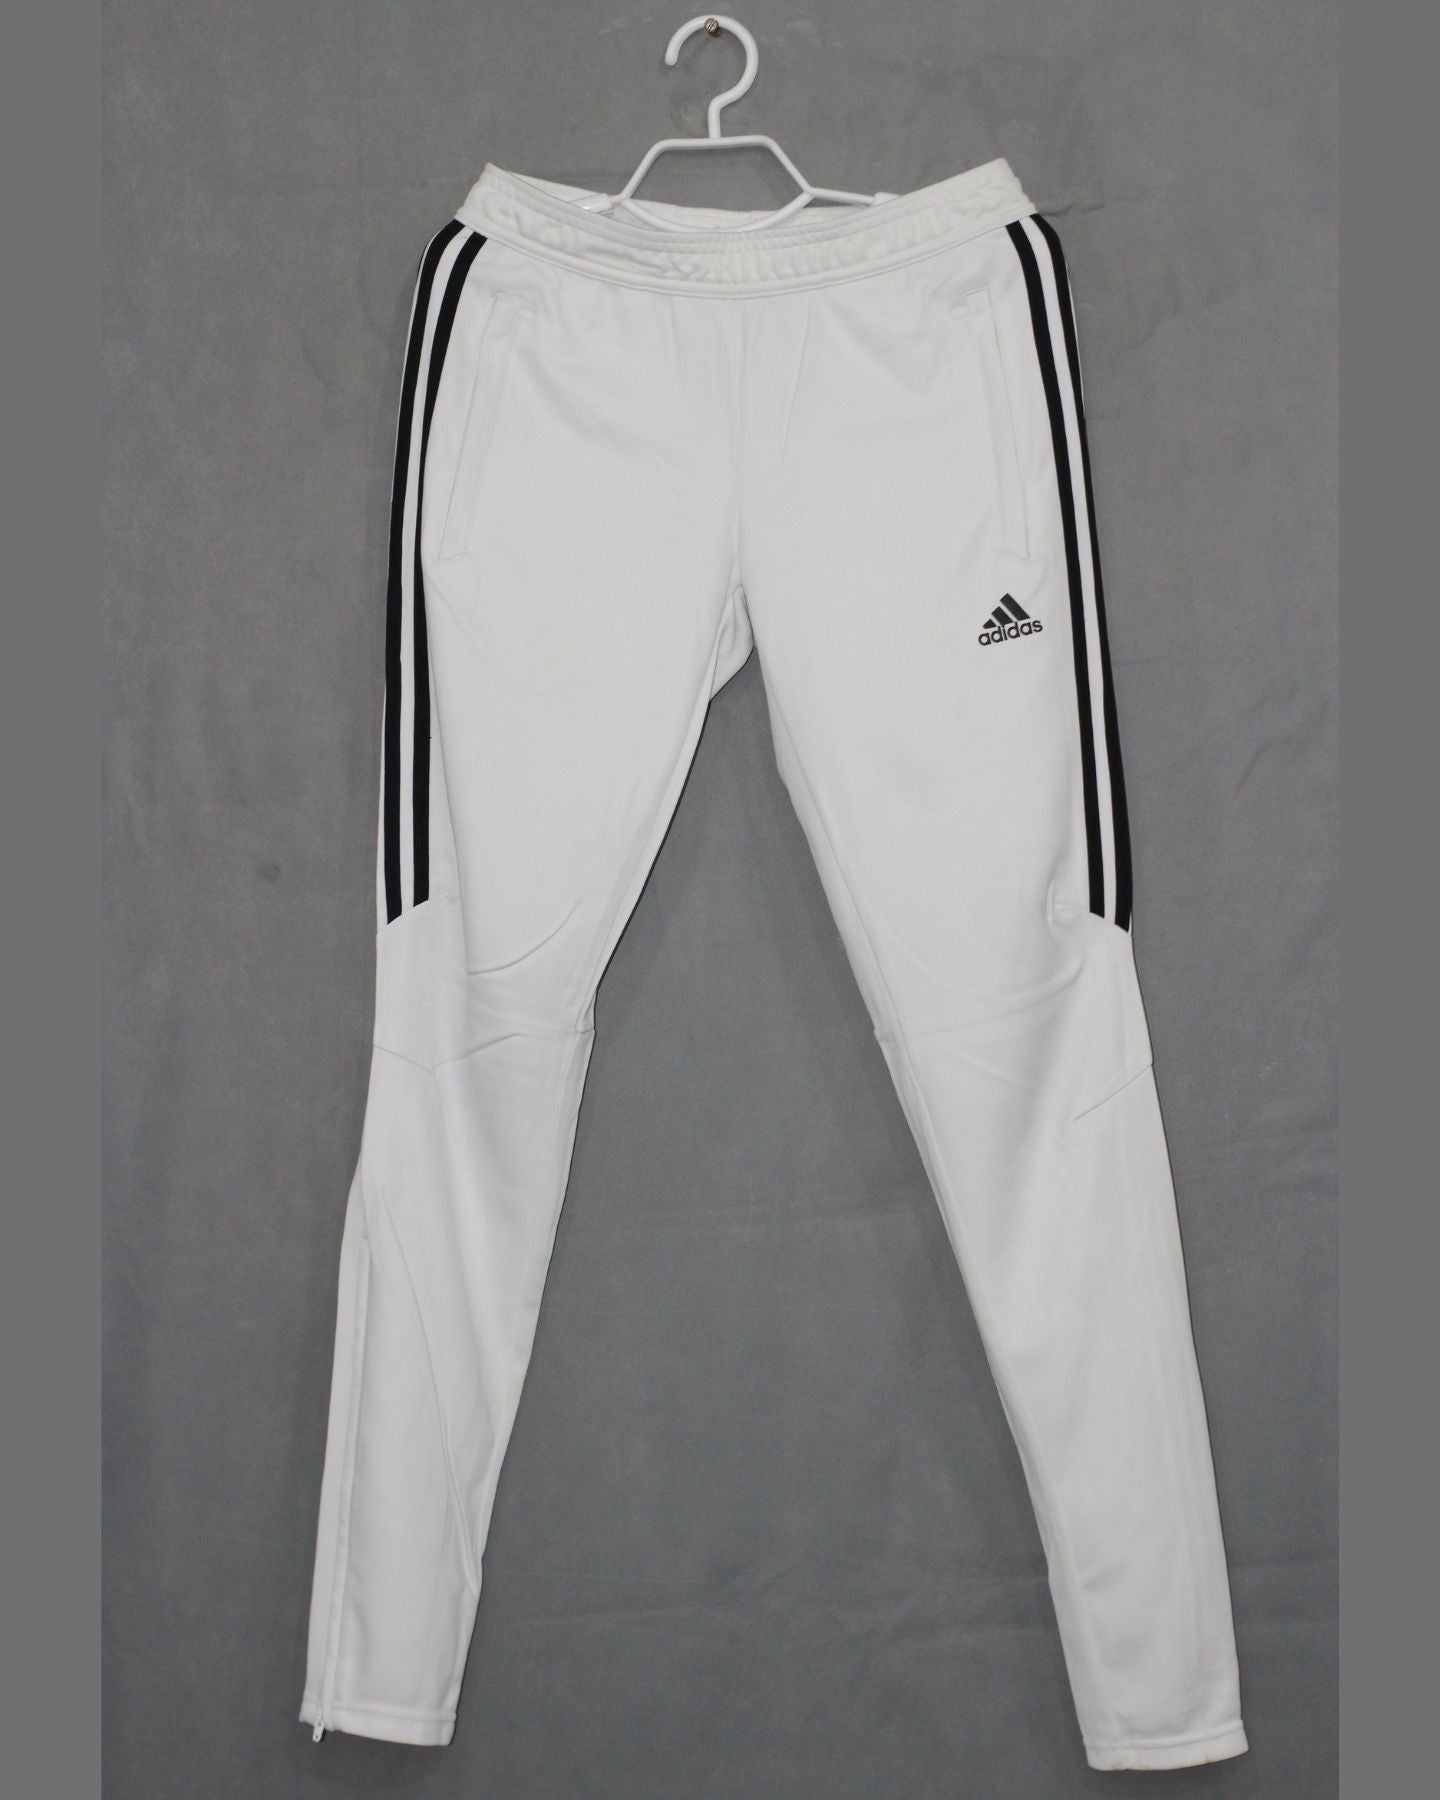 Adidas Cimacool Branded Original Sports Trouser For Men